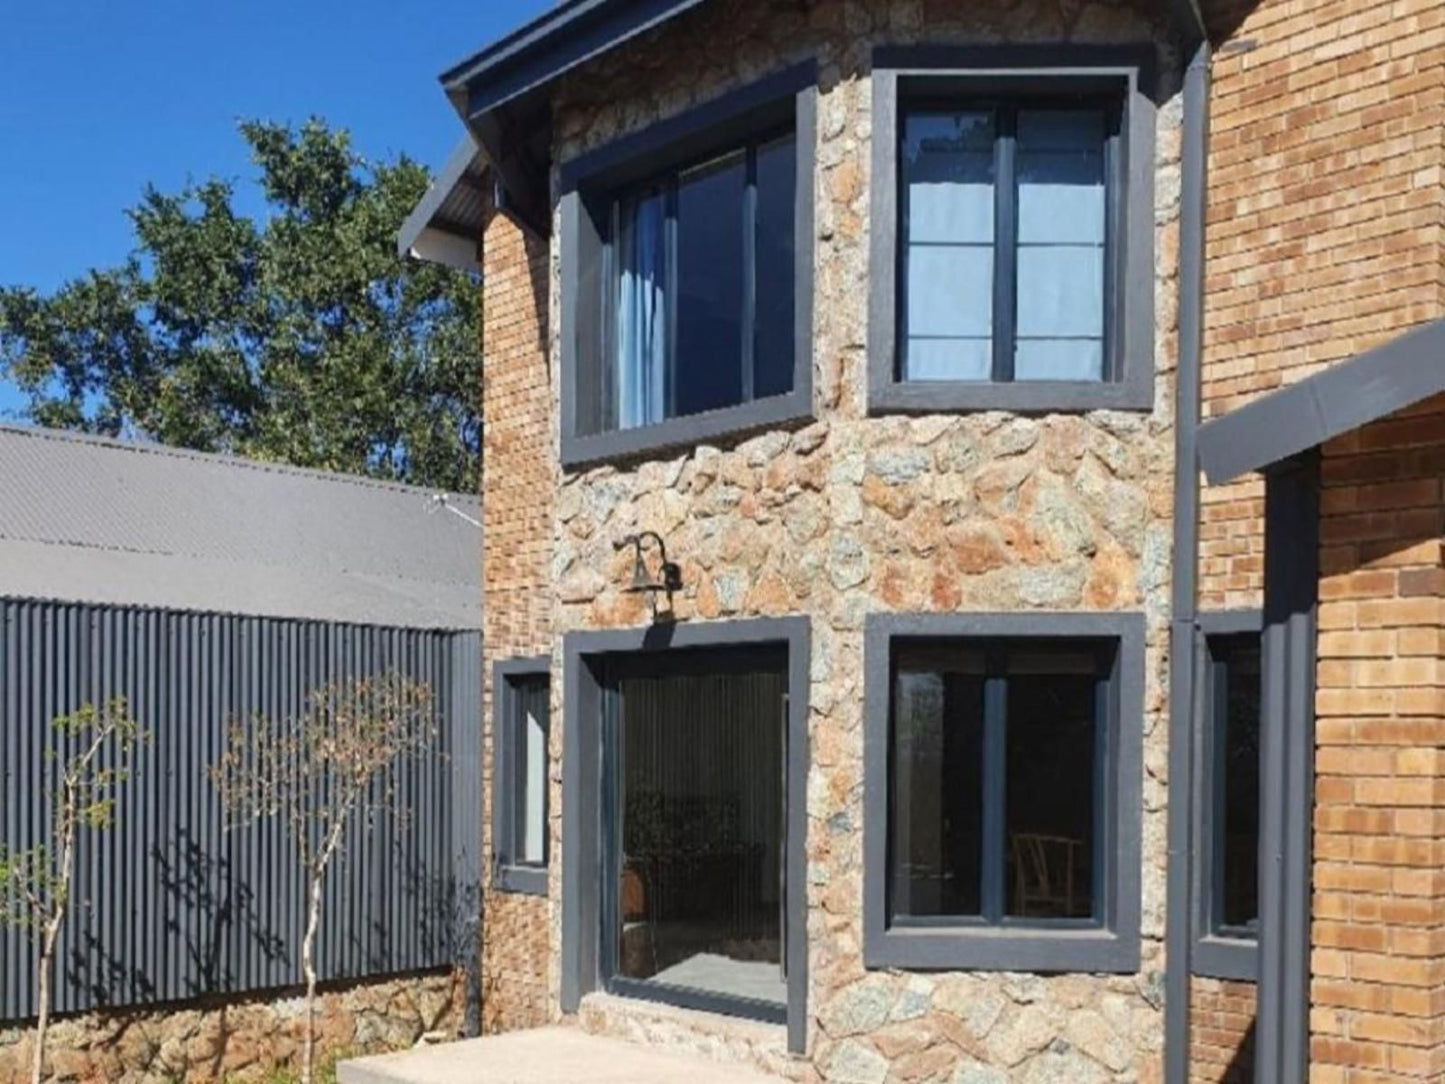 Via Lactea Moetladimo Limpopo Province South Africa House, Building, Architecture